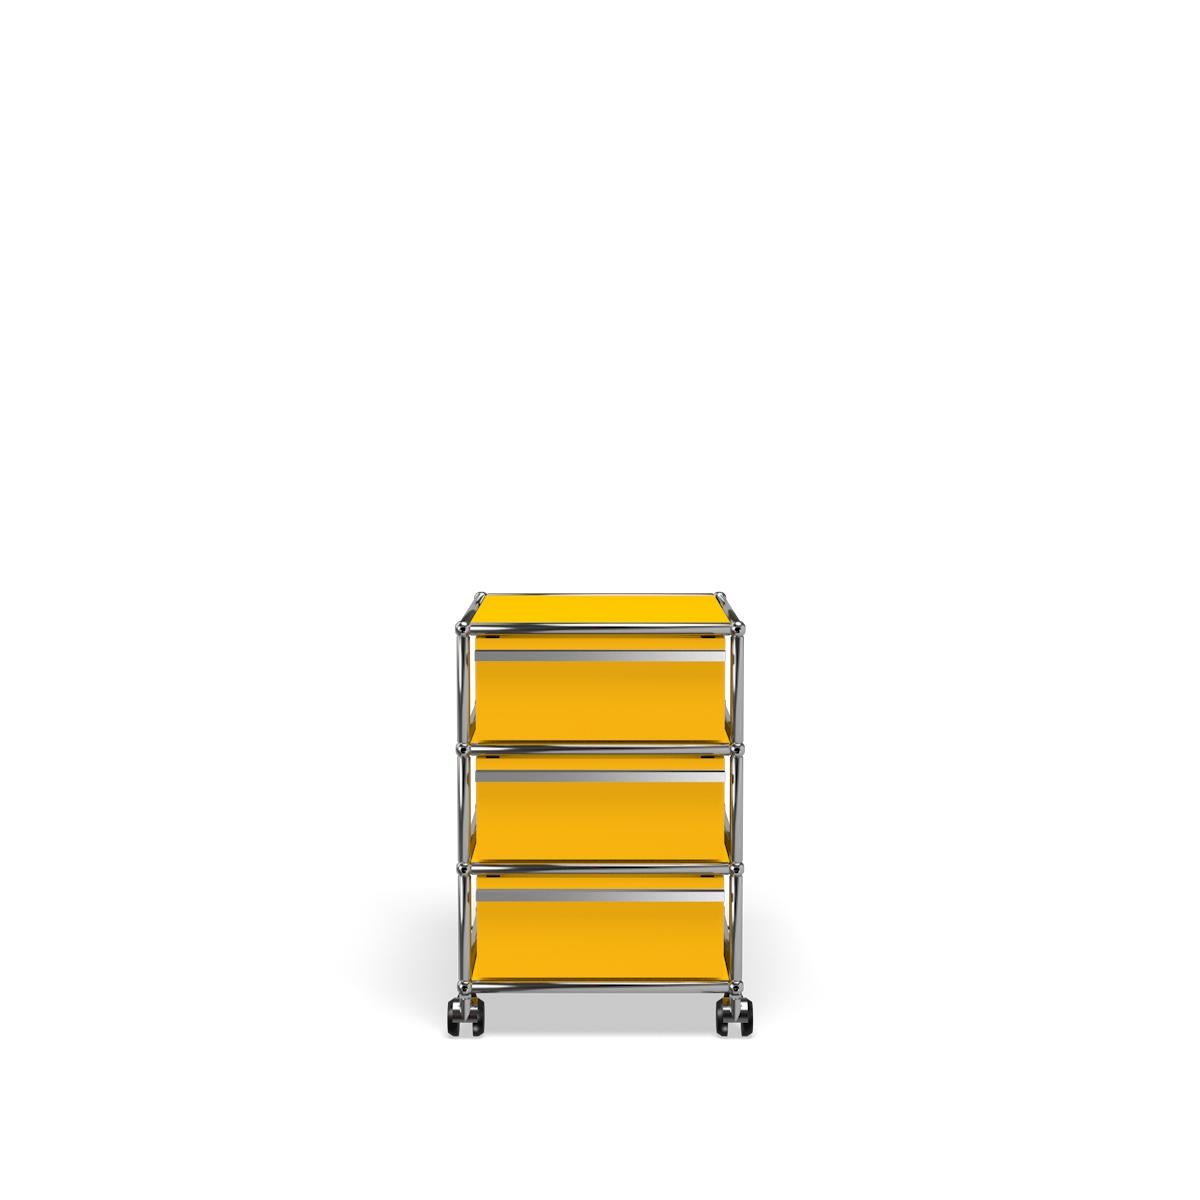 Im Angebot: USM Haller Pedestal V Lagersystem, Yellow (Golden Yellow)